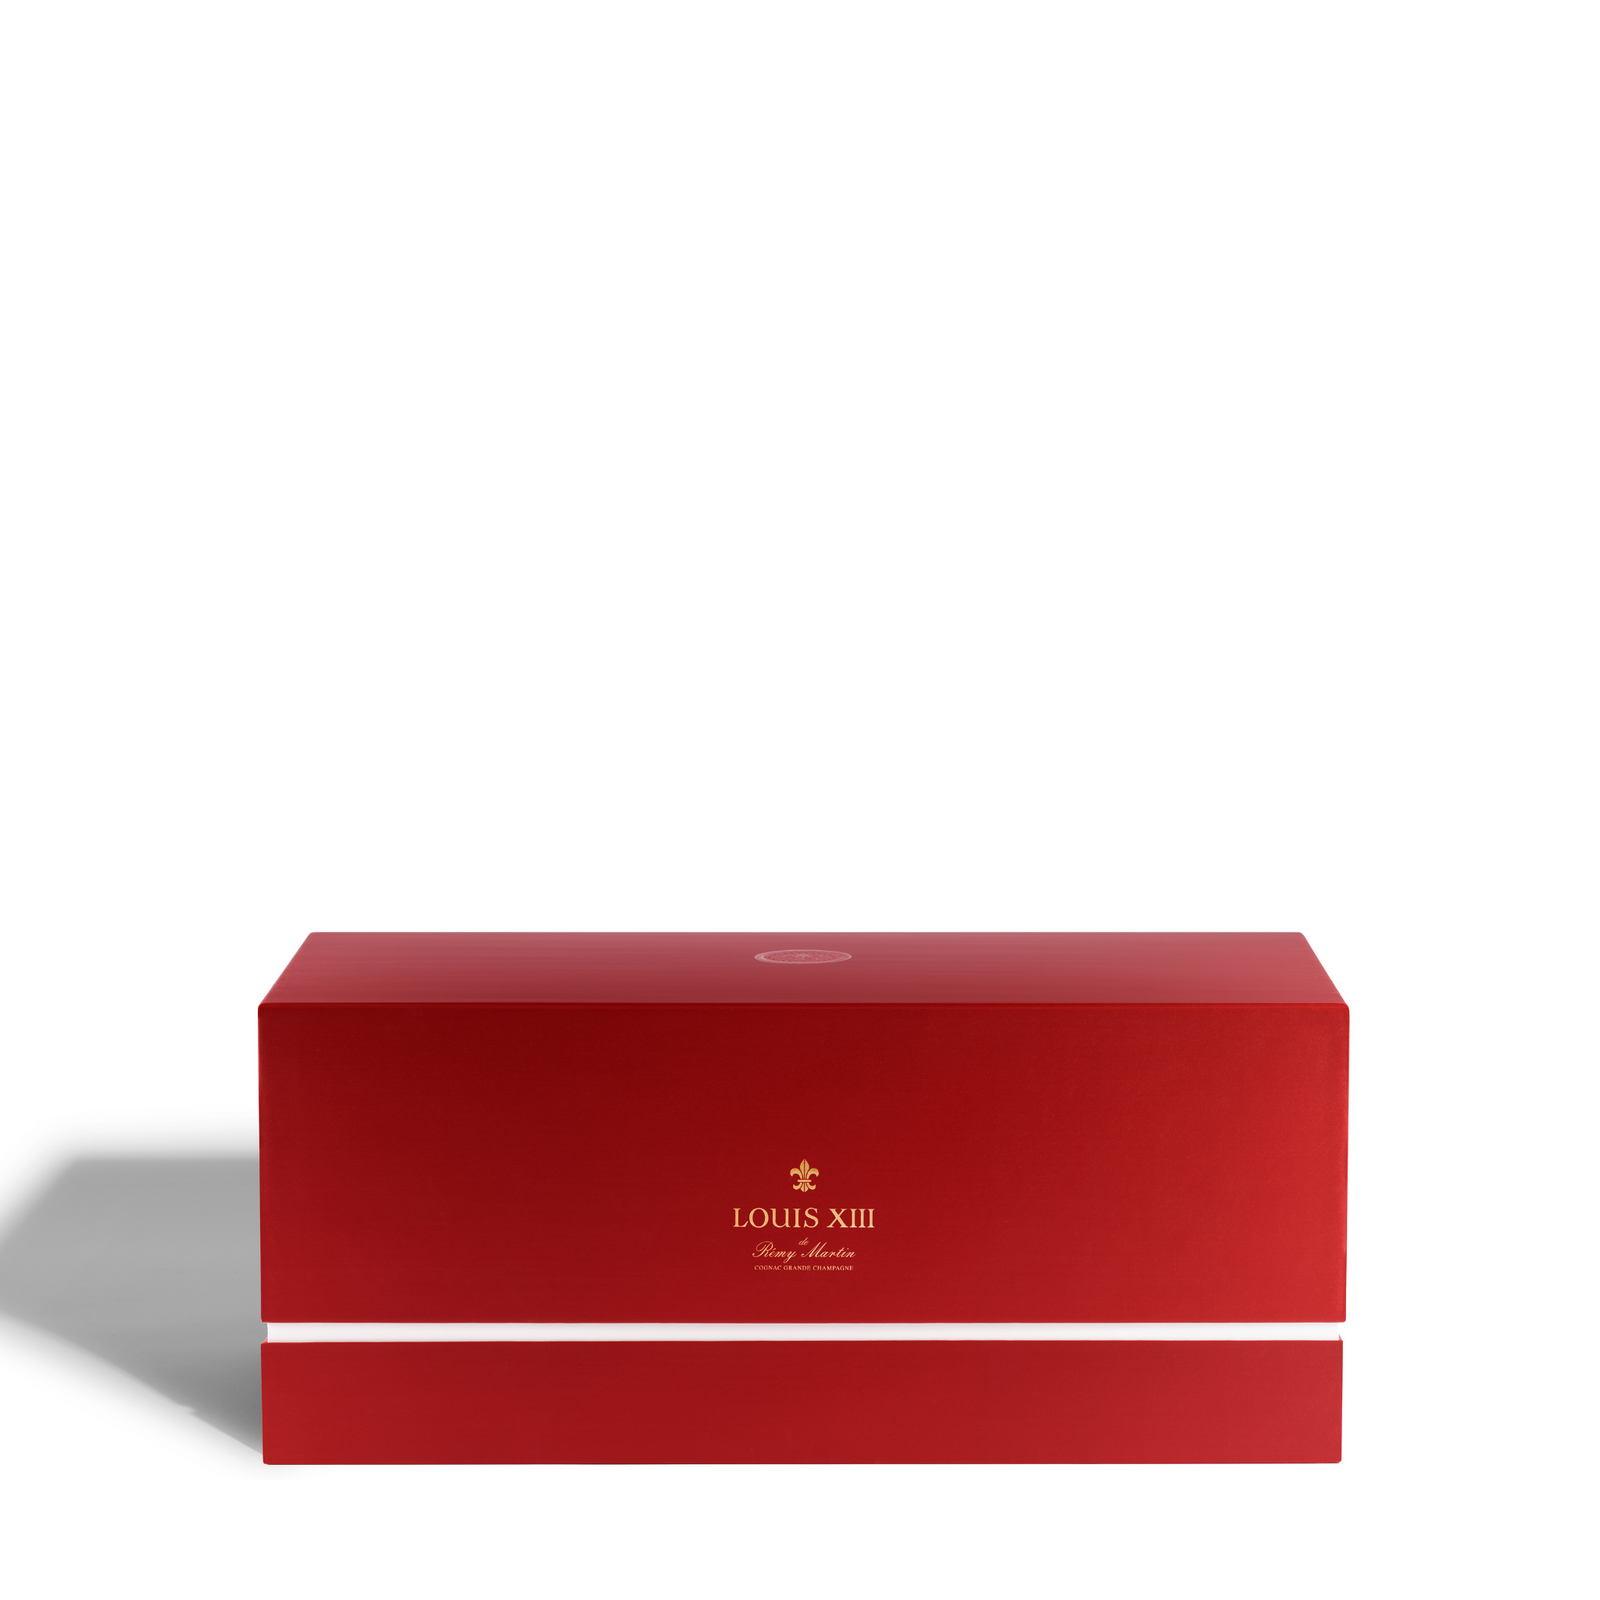 A packshot of a red LOUIS XIII cigar set packaging